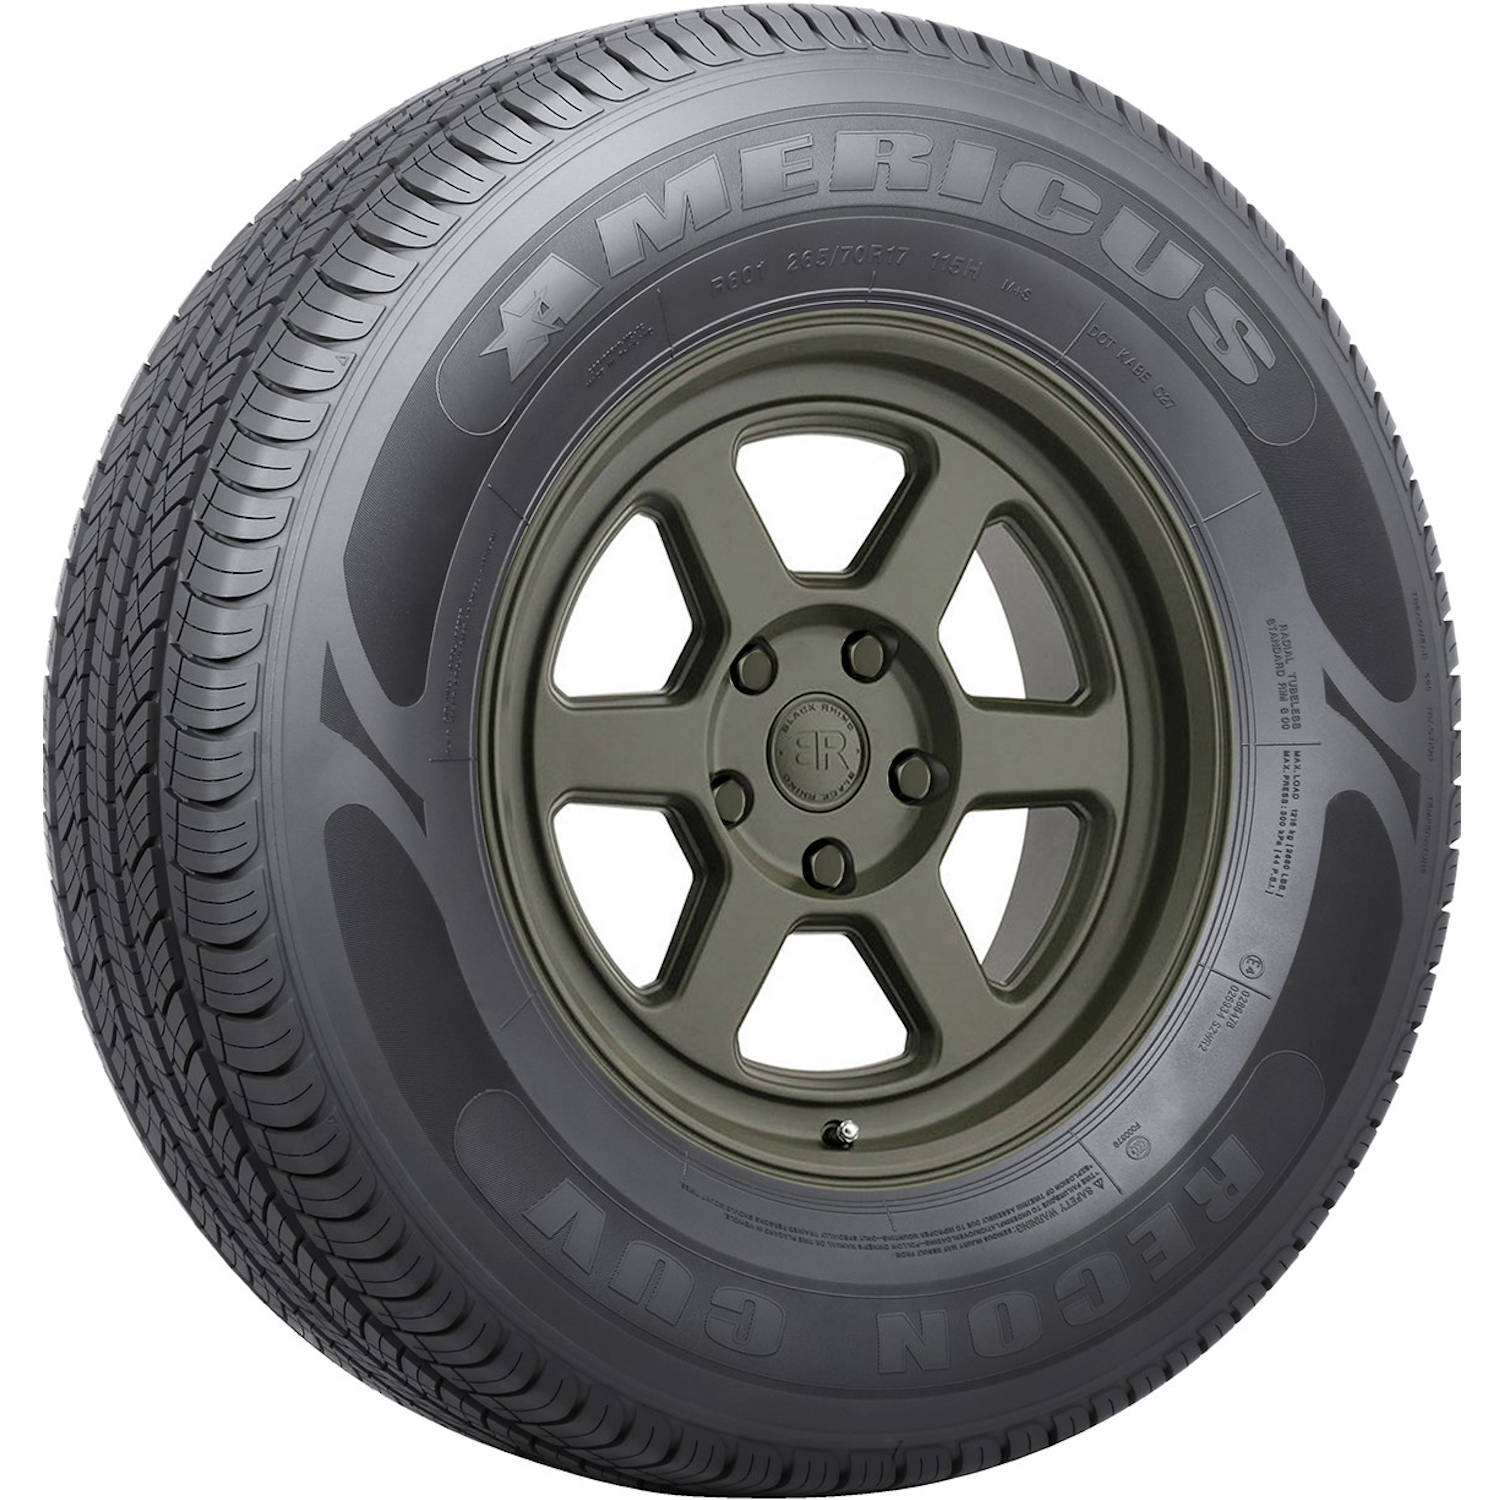 AMERICUS RECON CUV 245/60R18 (29.6X9.7R 18) Tires